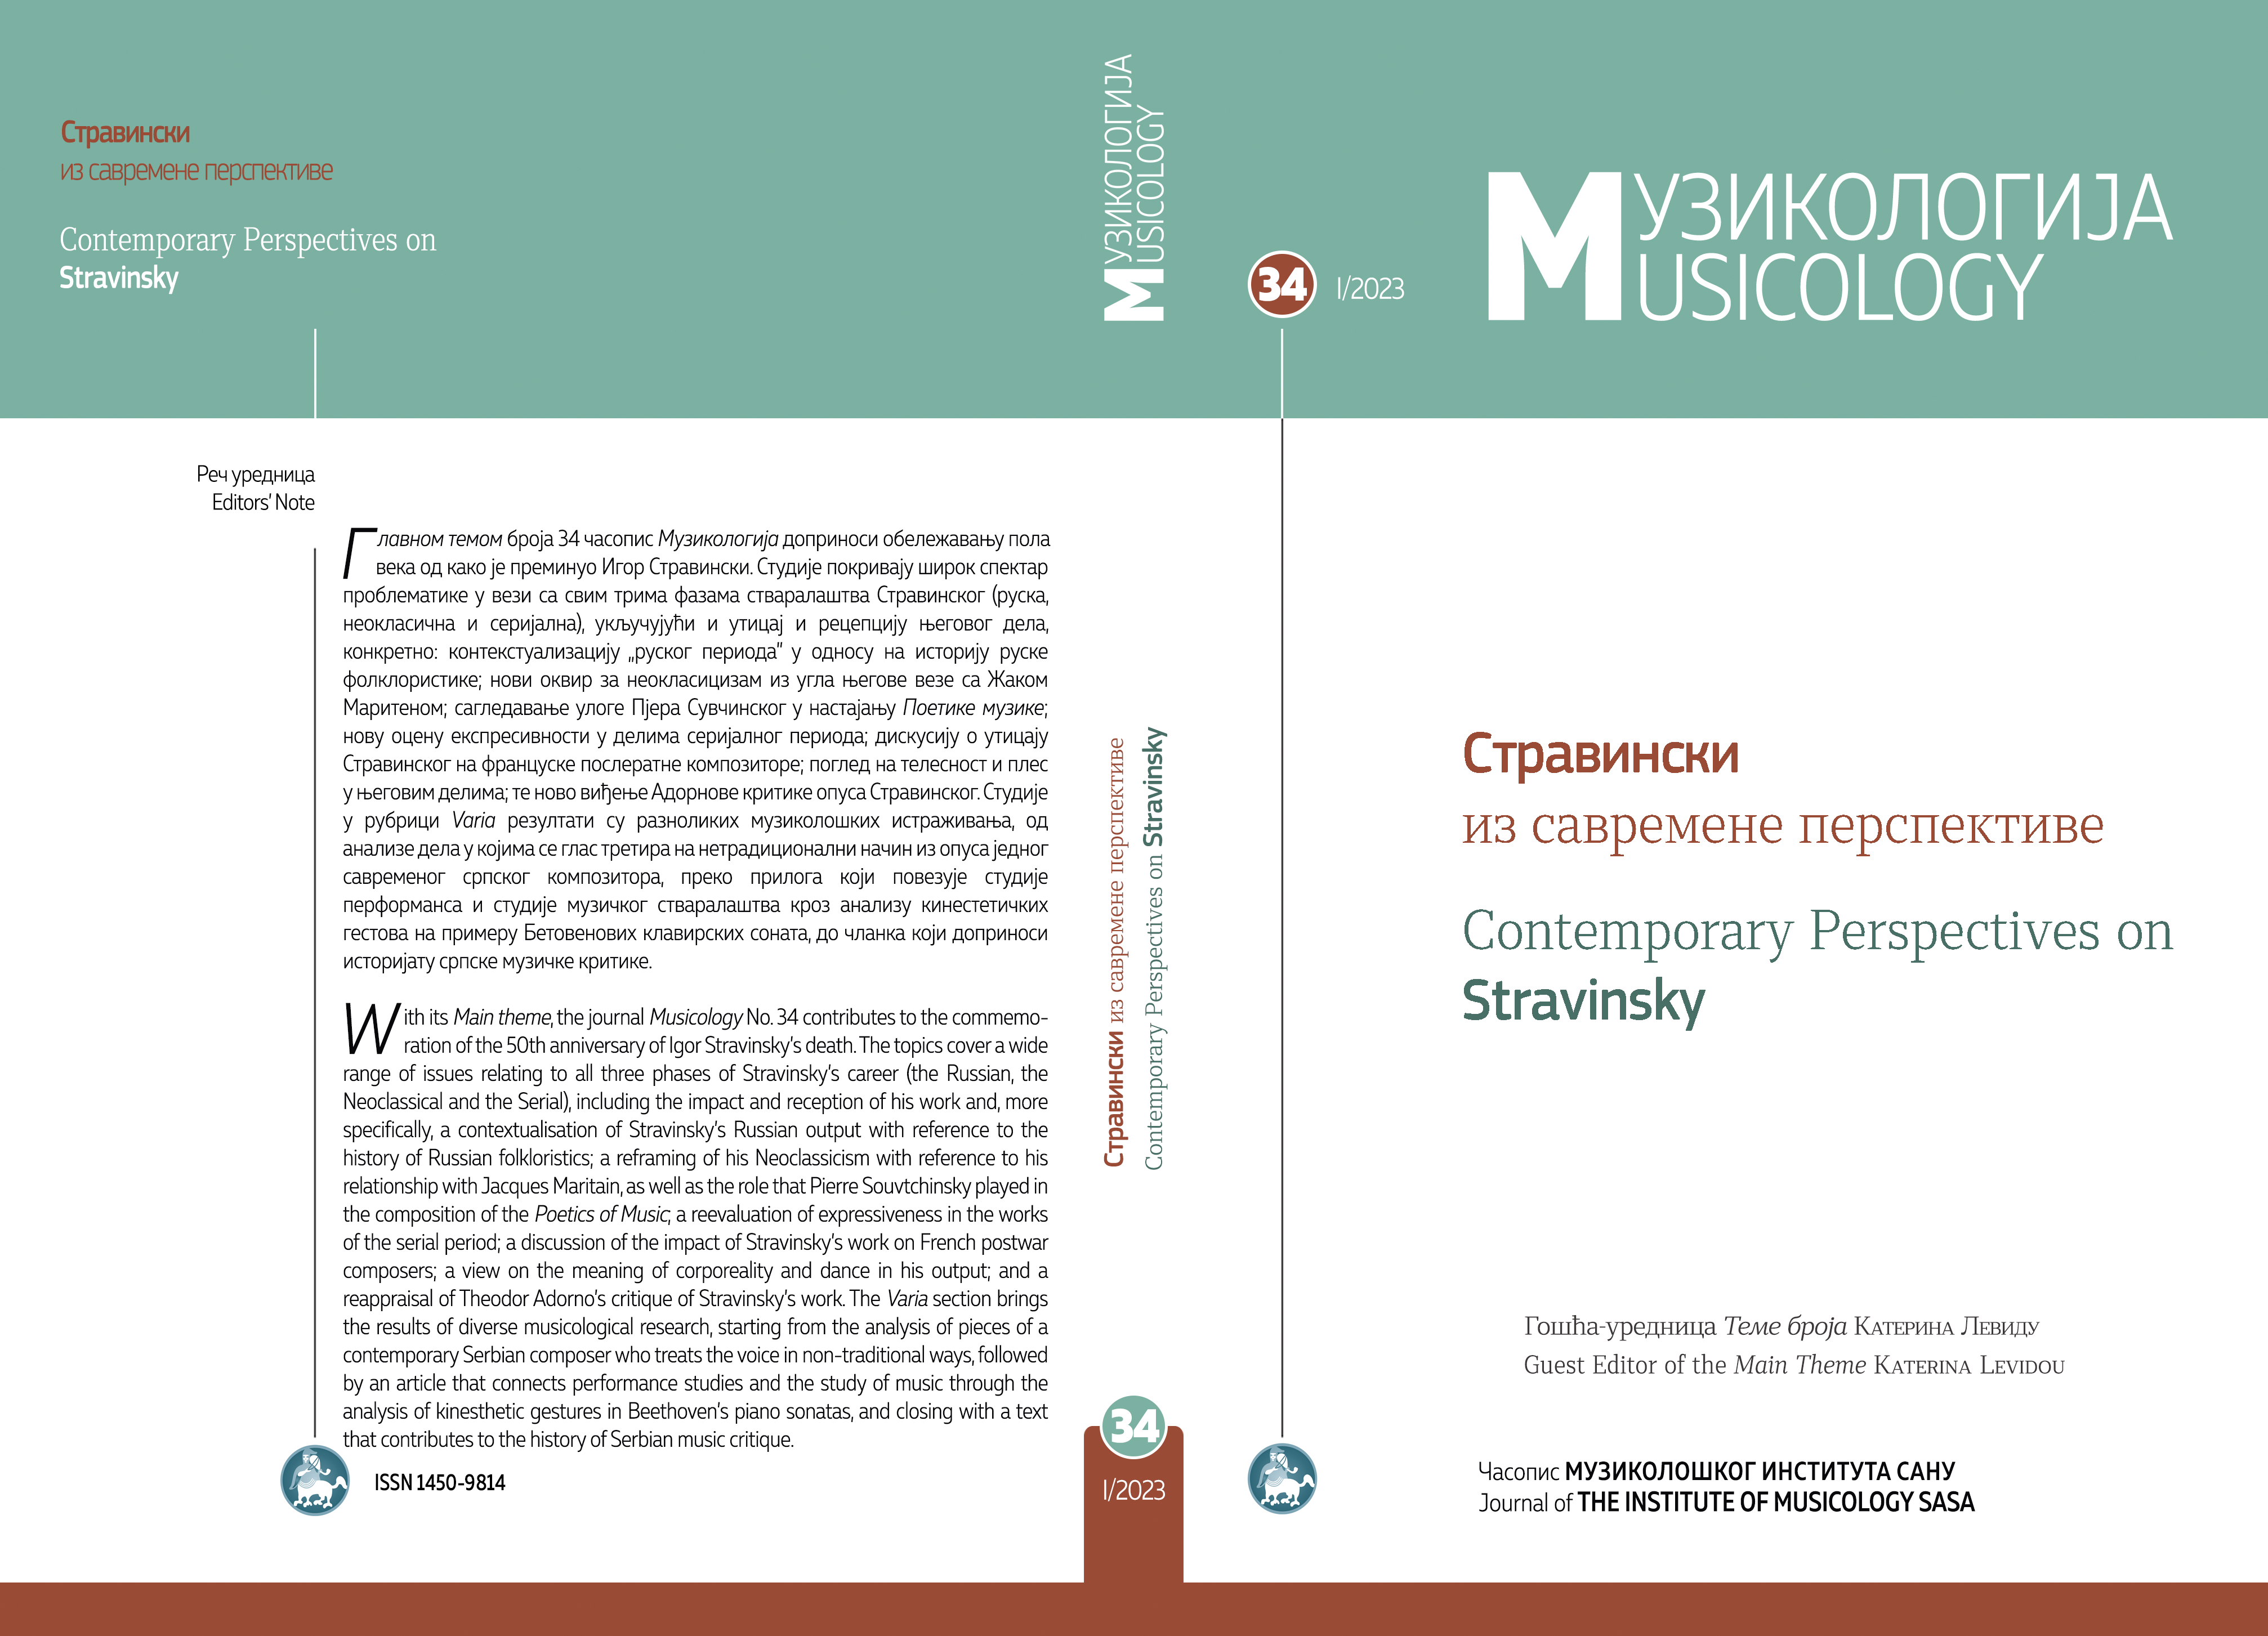 Expressiveness in Stravinsky’s Late Works Cover Image